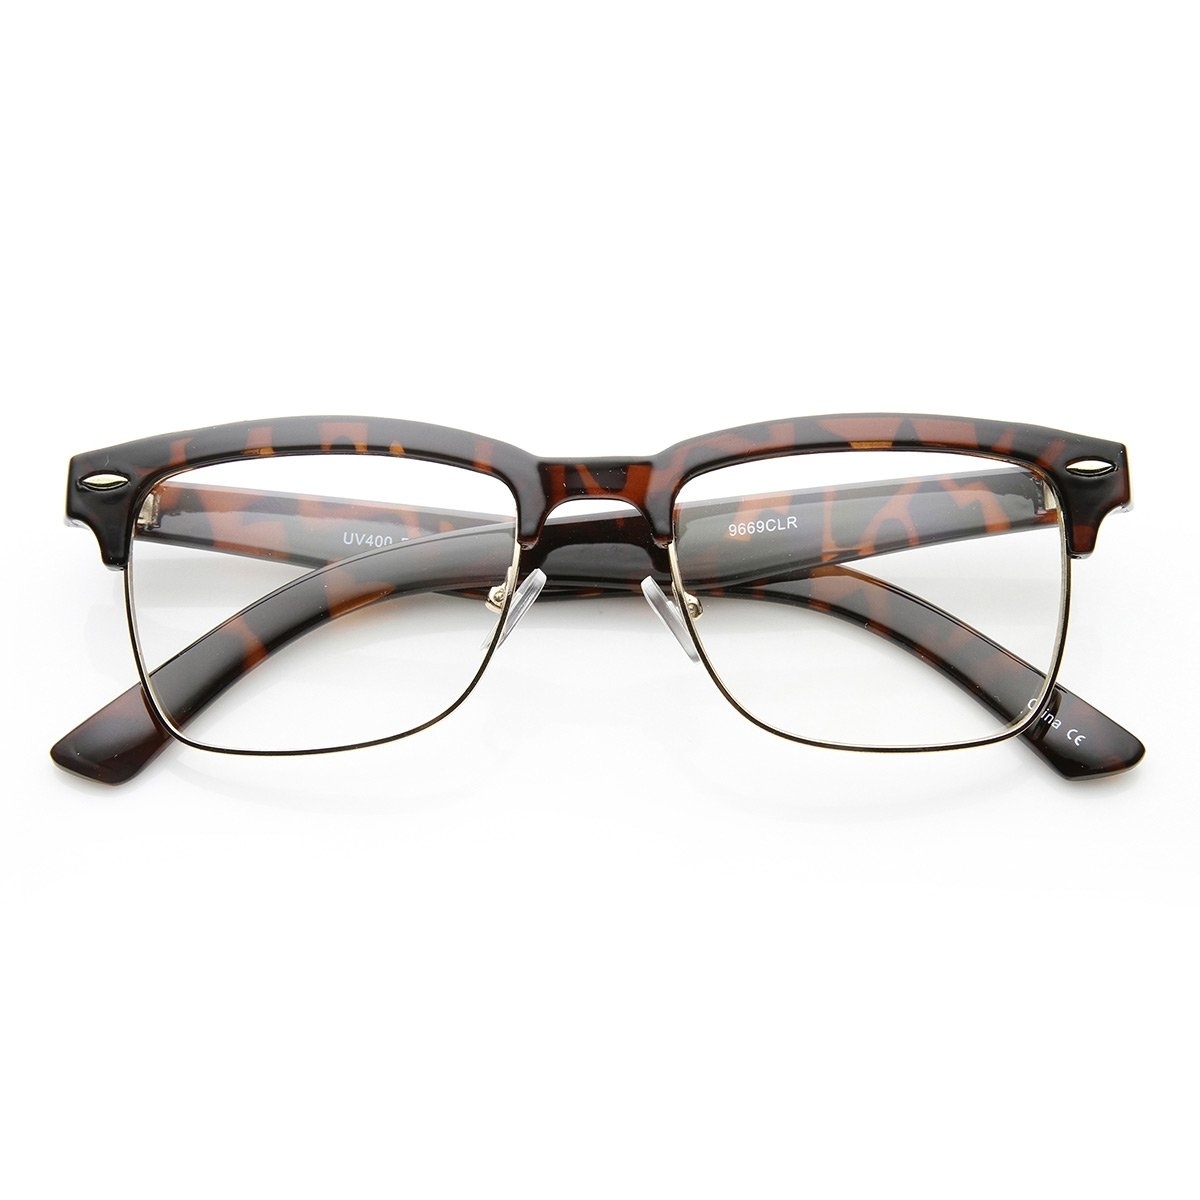 Unisex Square Medium Semi-Rimless Modern Fashion Glasses - Matte-Black-Silver